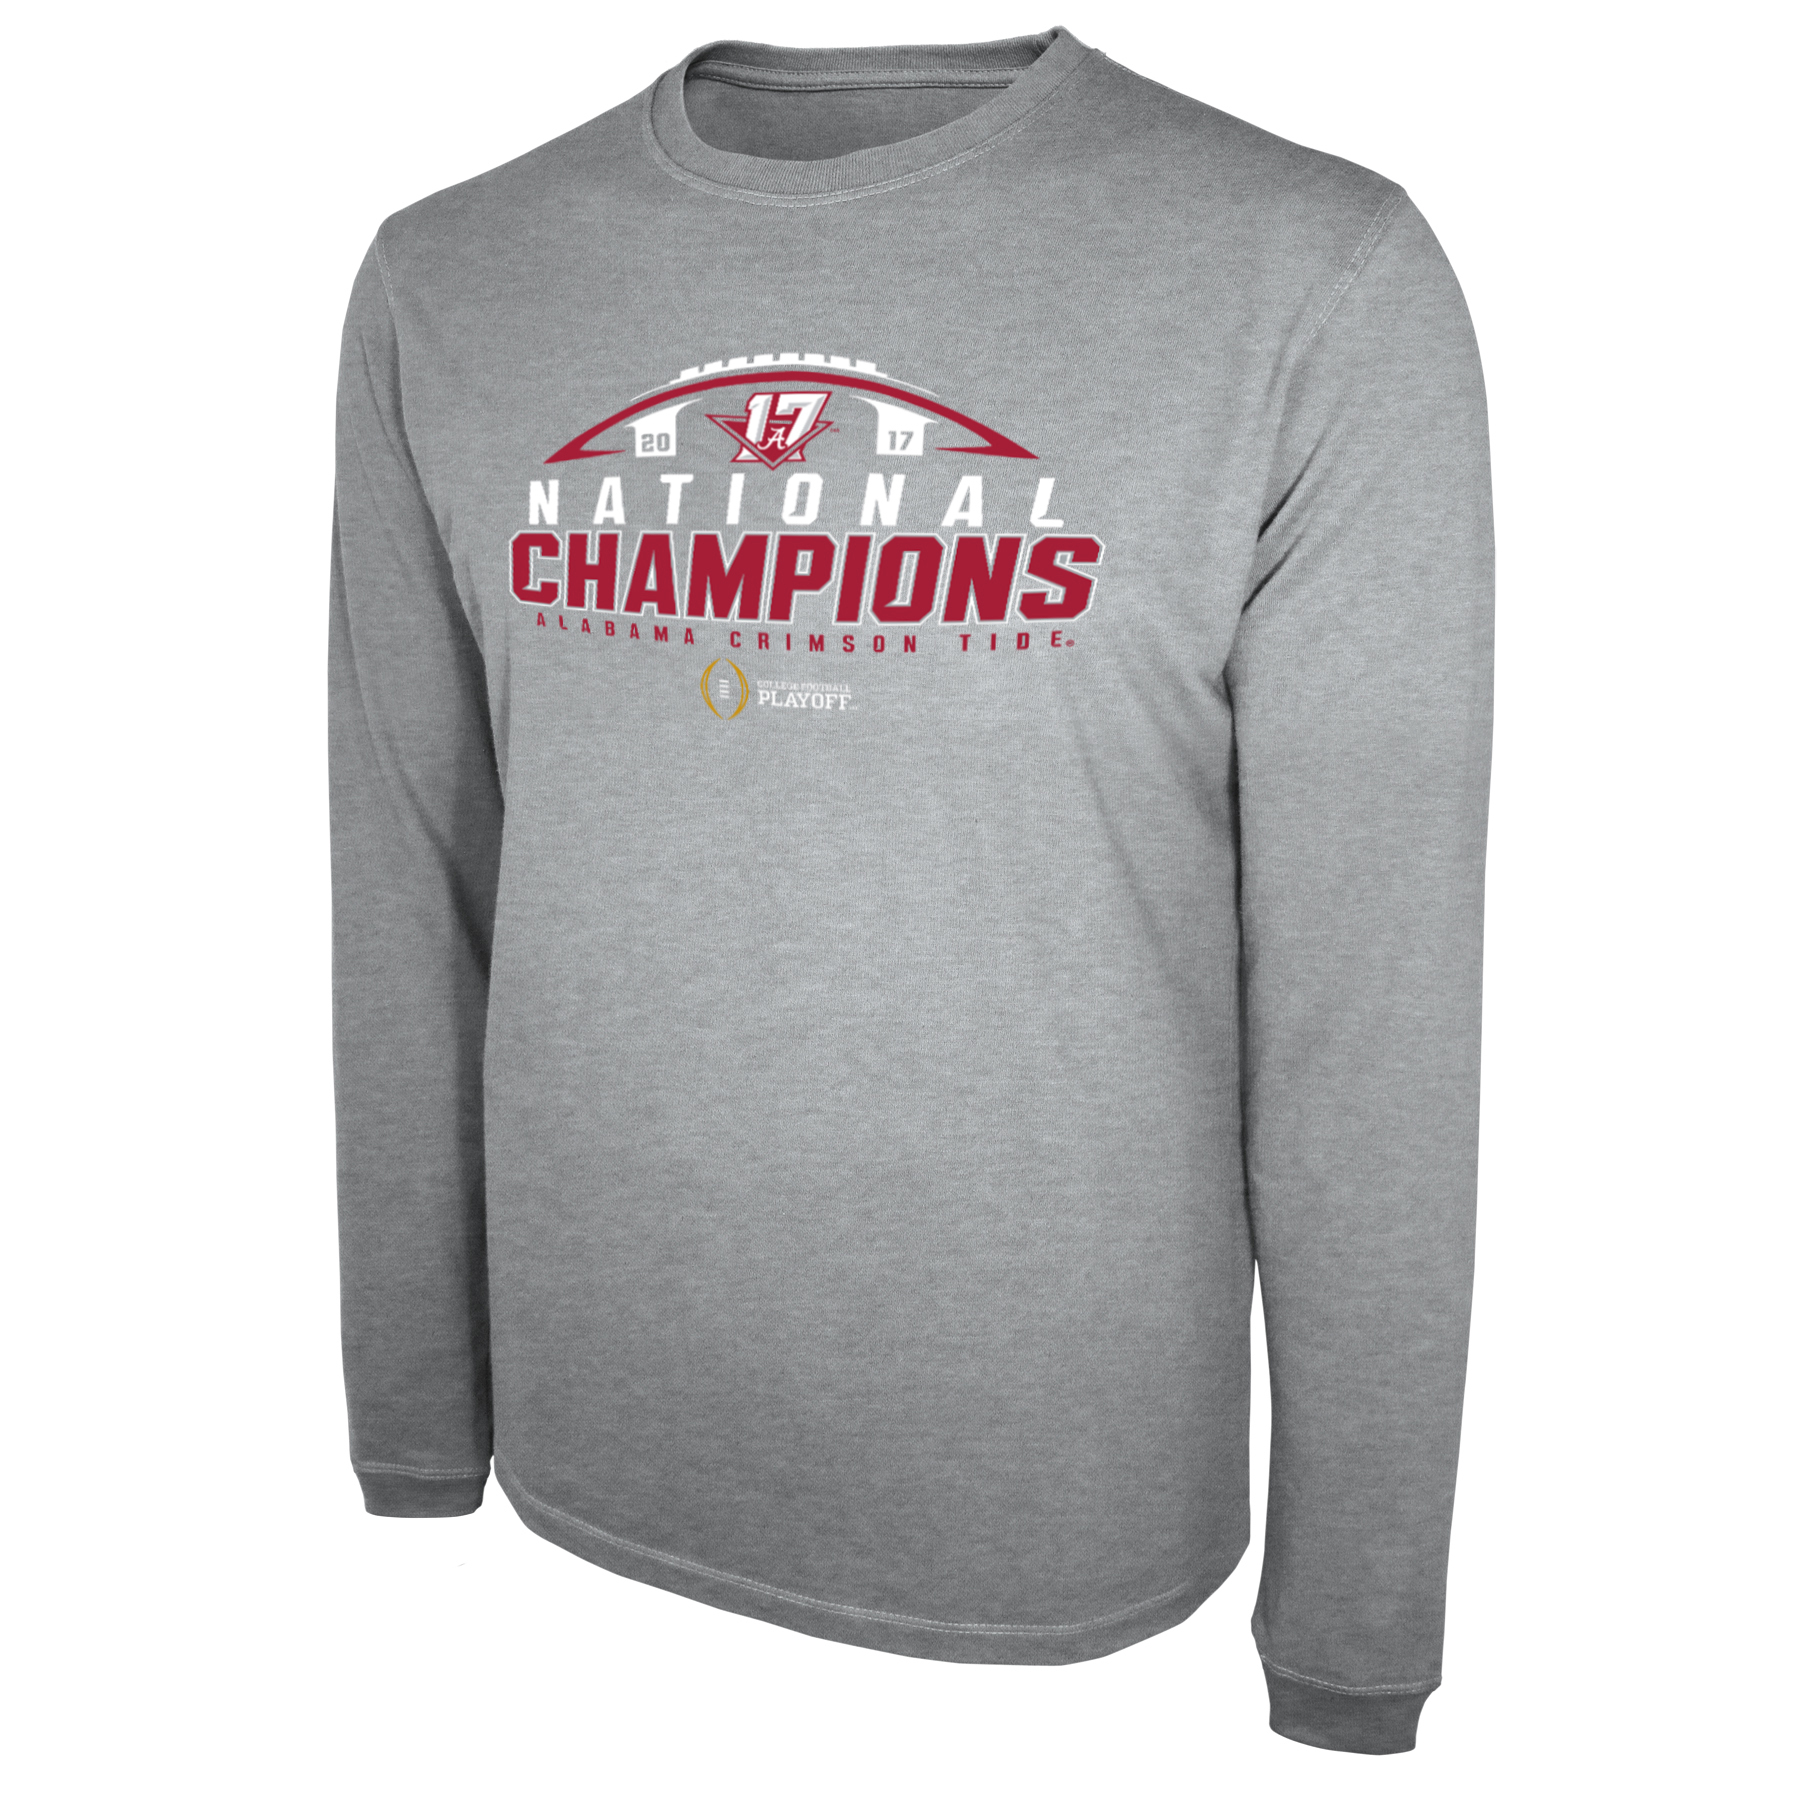 NCAA Men’s Long-Sleeve National Champions T-Shirt - Alabama Crimson Tide